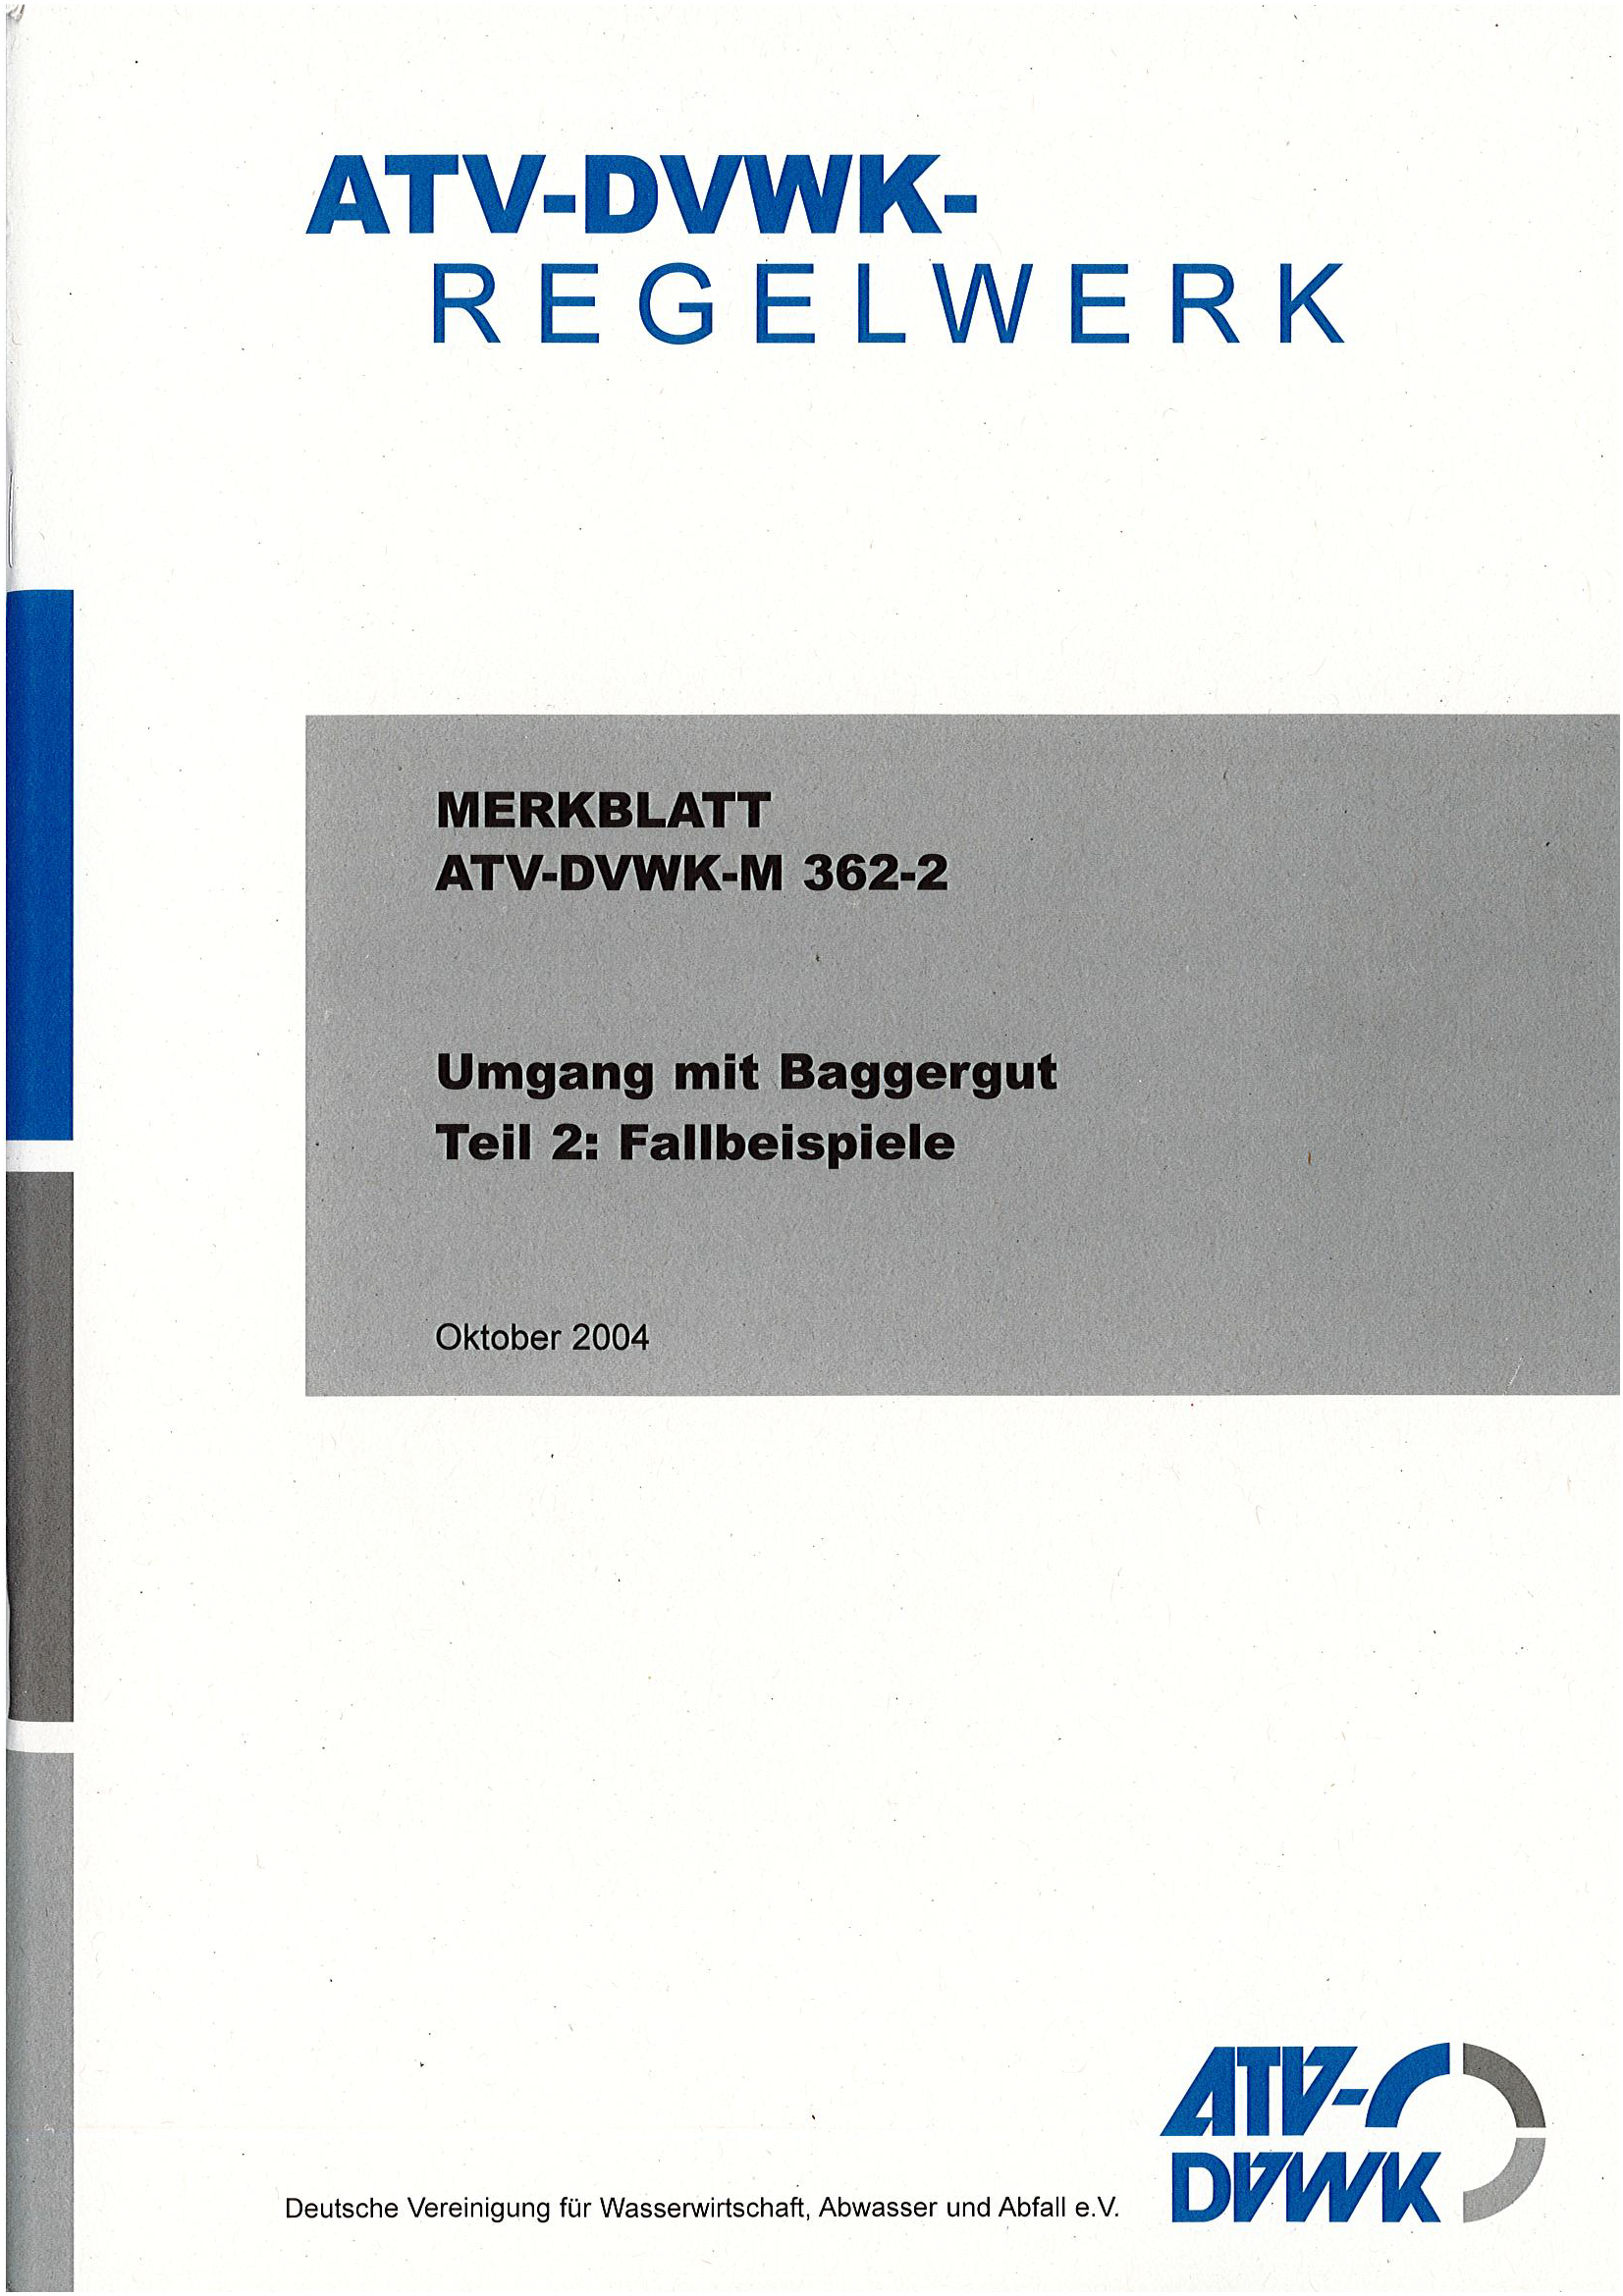 ATV-M 362-2 - Umgang mit Baggergut - Teil 2: Fallbeispiele - Oktober 2004